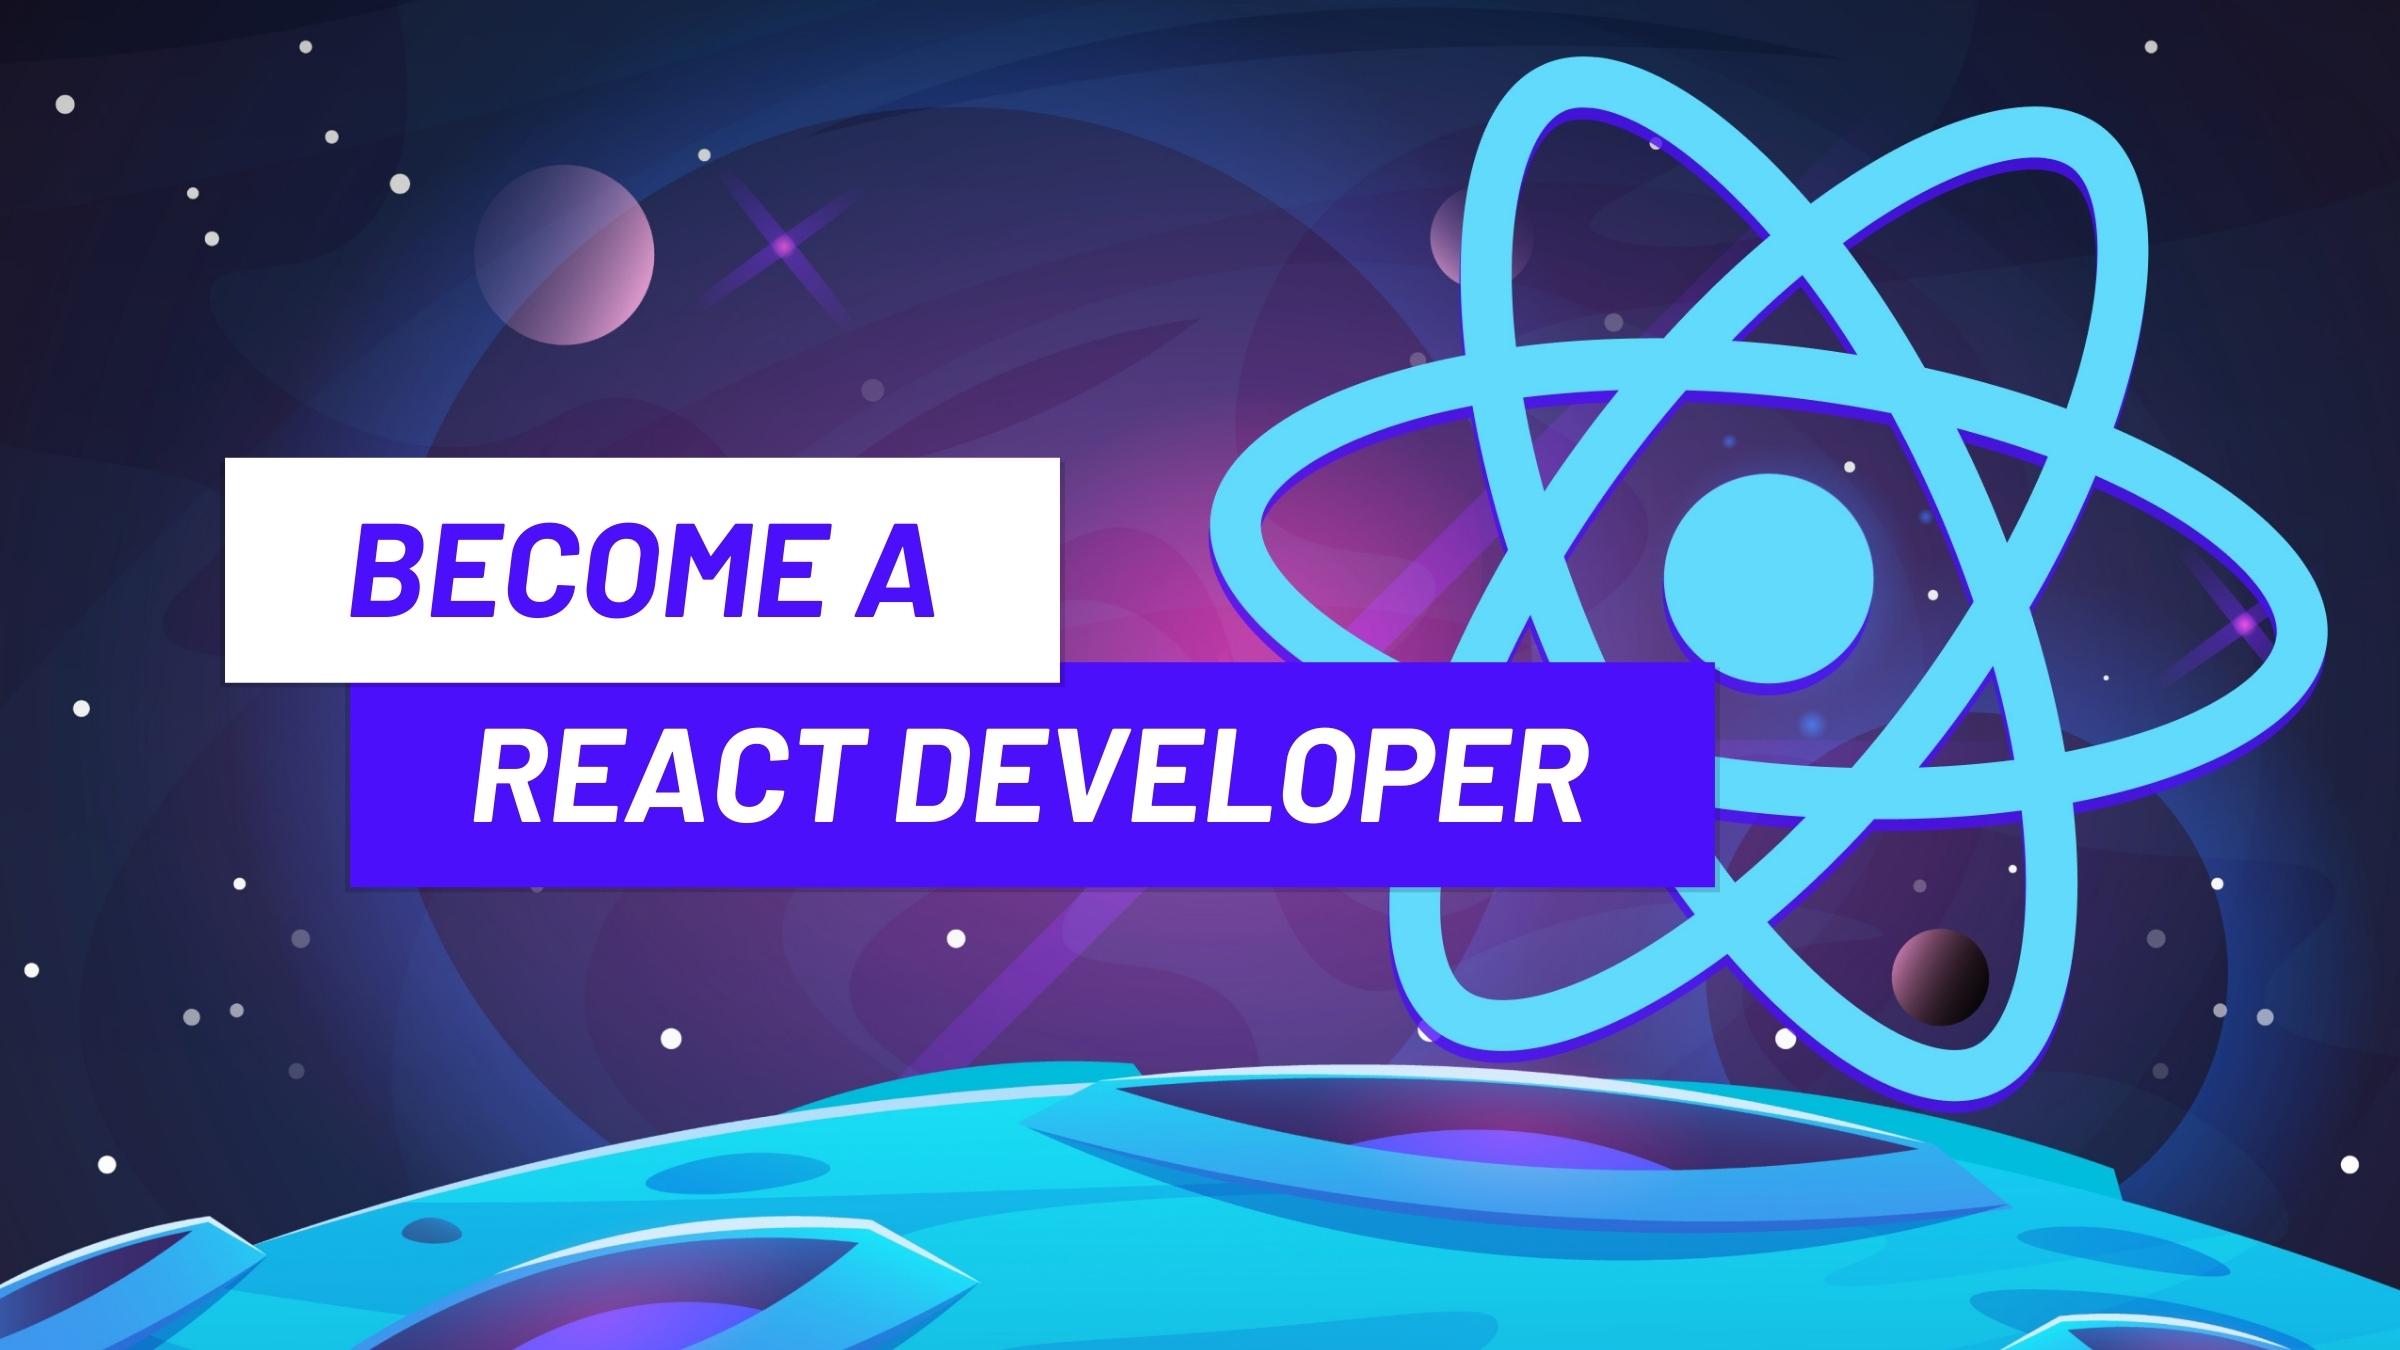 Become A React Developer Job banner image showing job scops